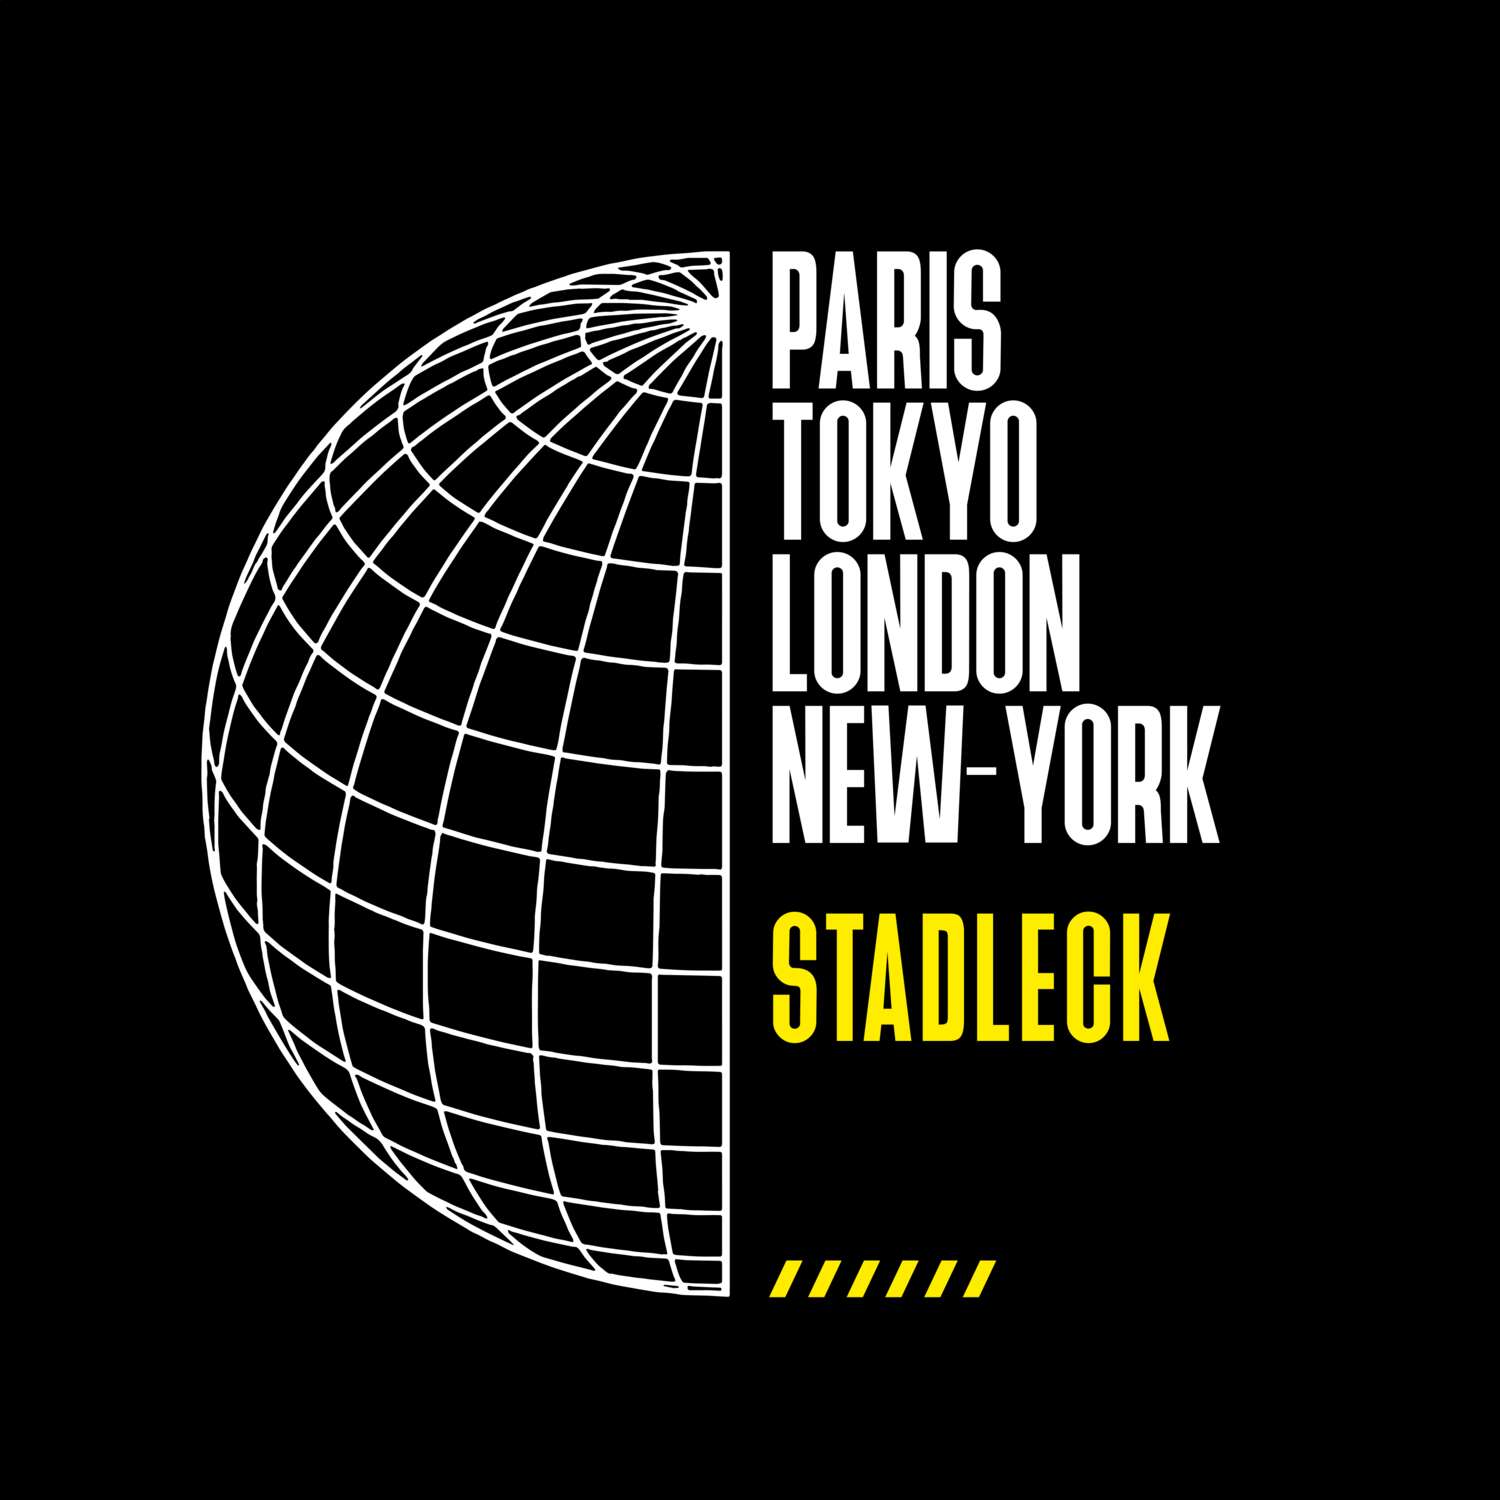 Stadleck T-Shirt »Paris Tokyo London«